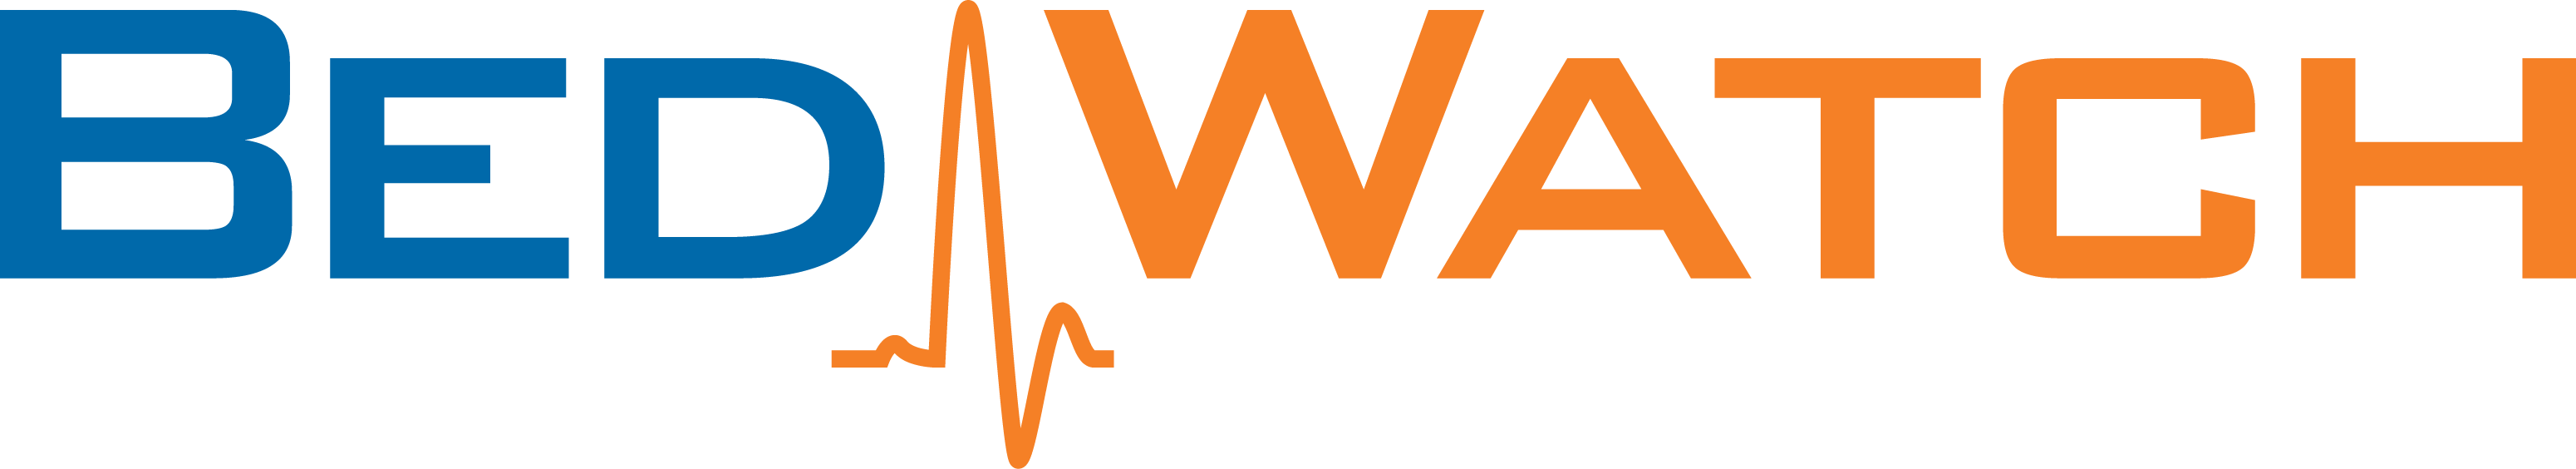 BedWatch-logo